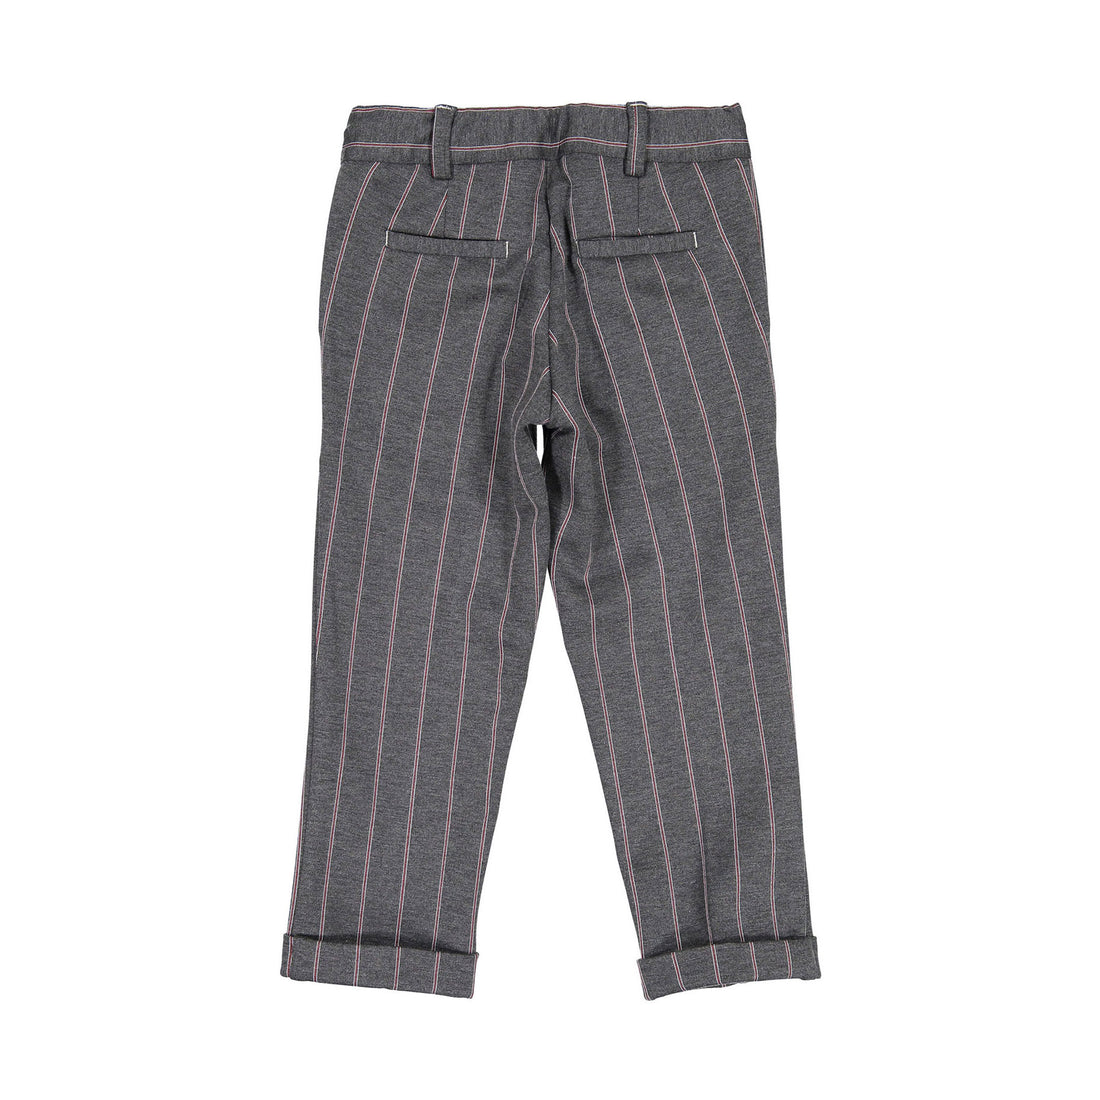 Manuelle Frank Grey Striped Pants